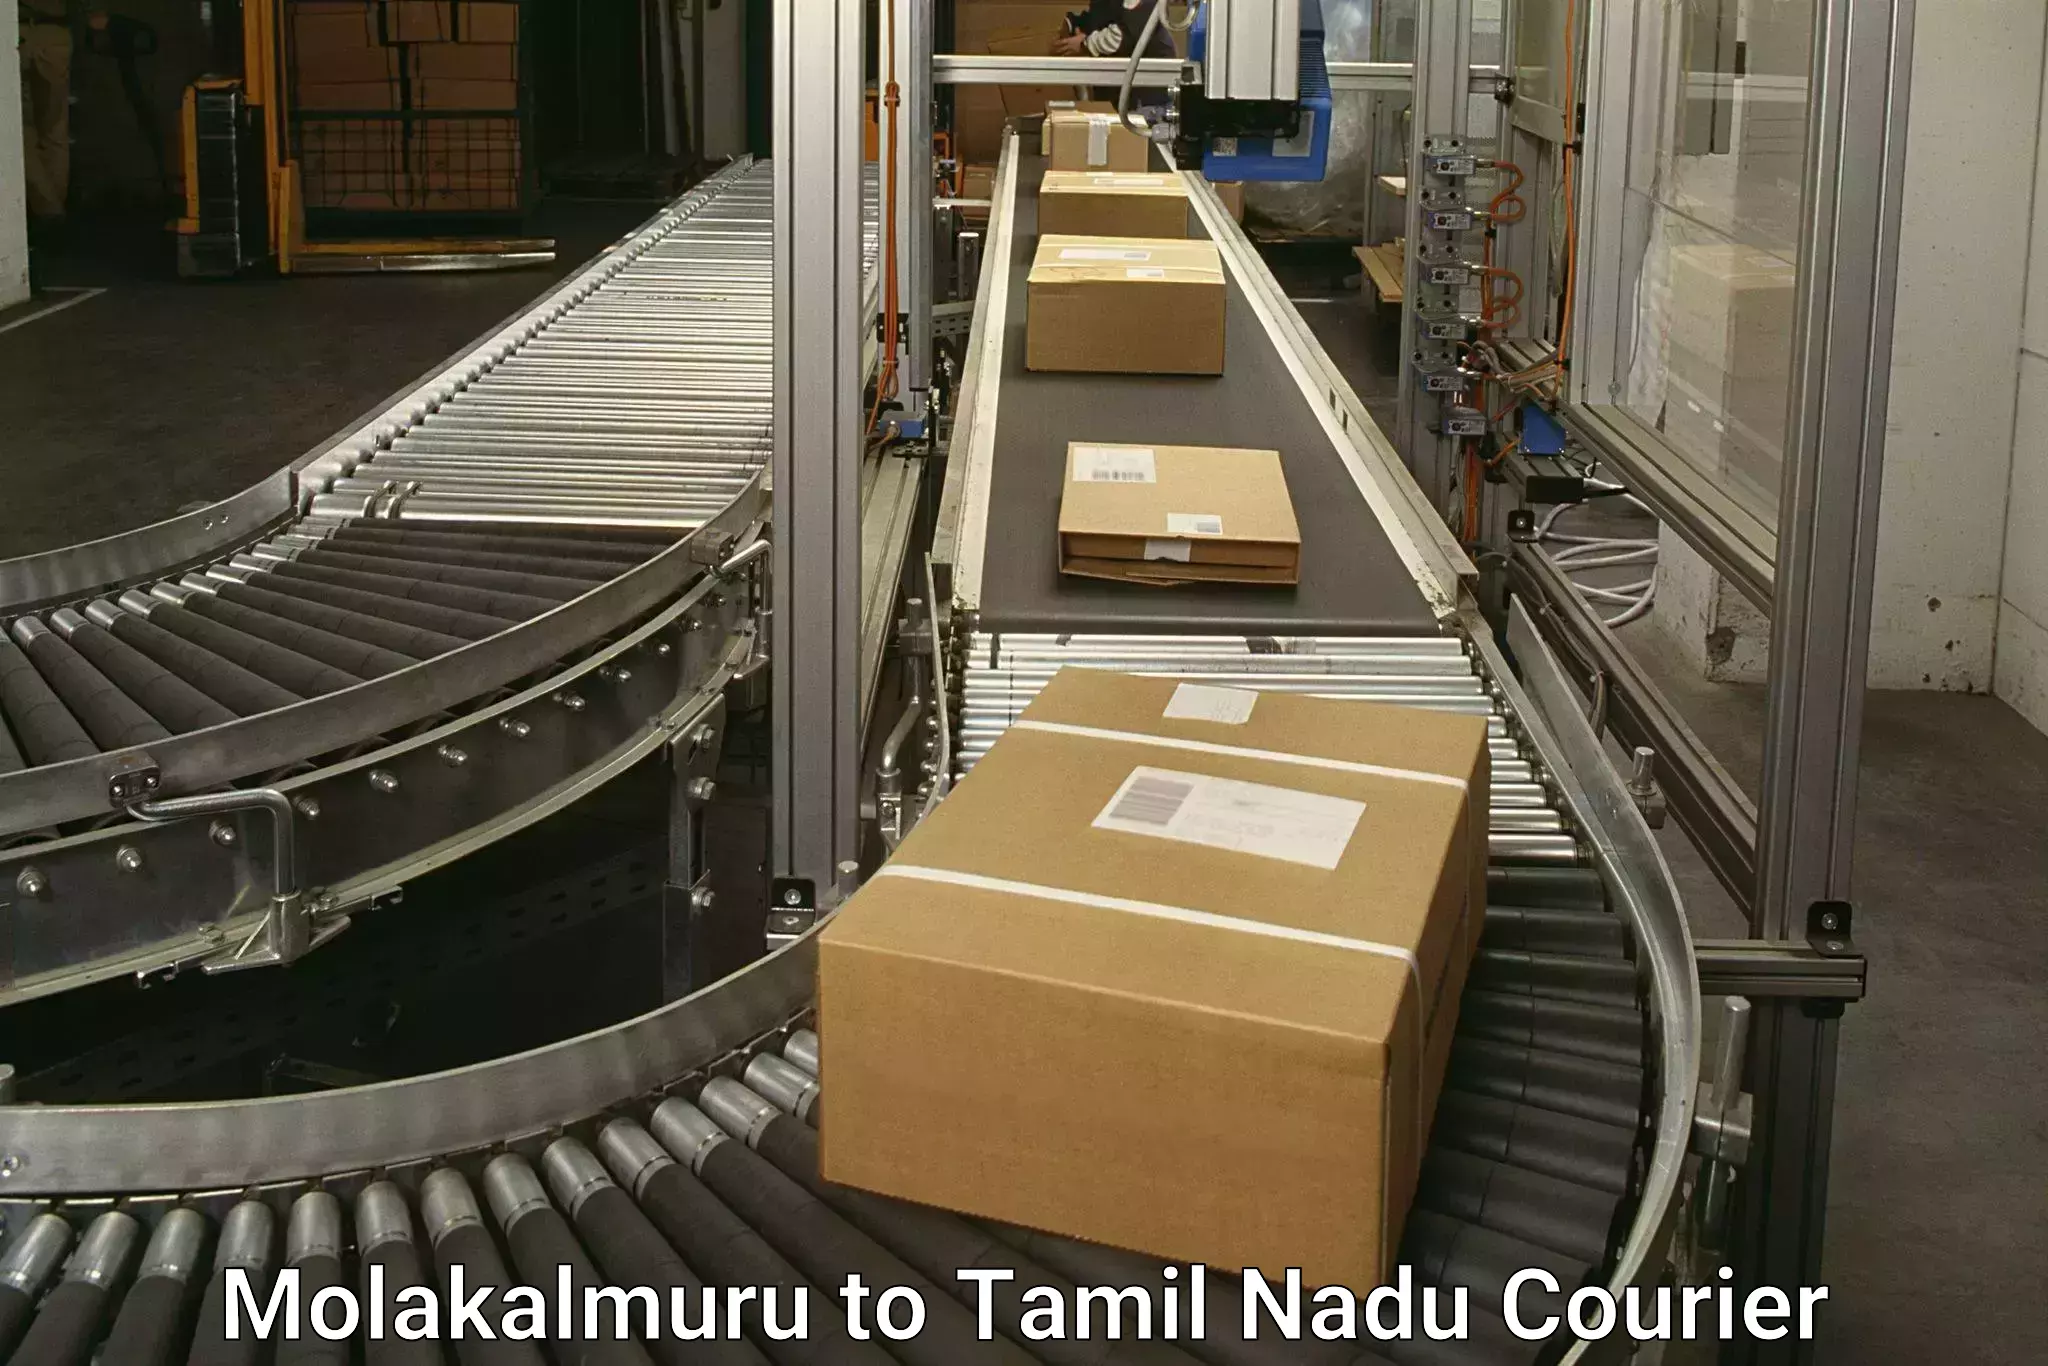 Digital courier platforms Molakalmuru to Mayiladuthurai